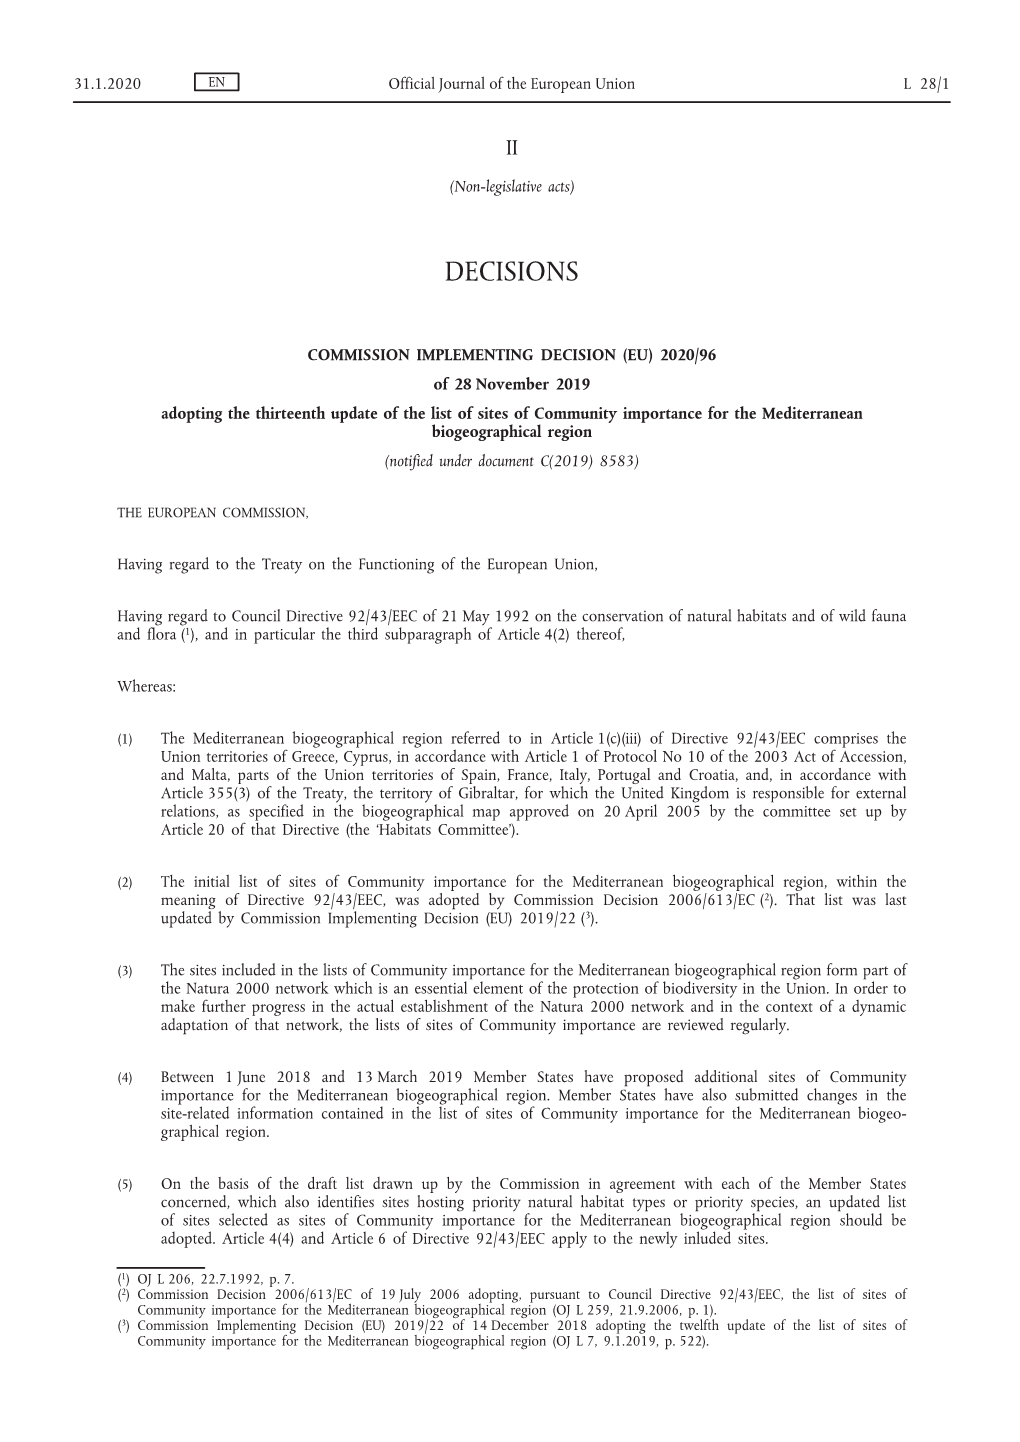 Commission Implementing Decision (EU)